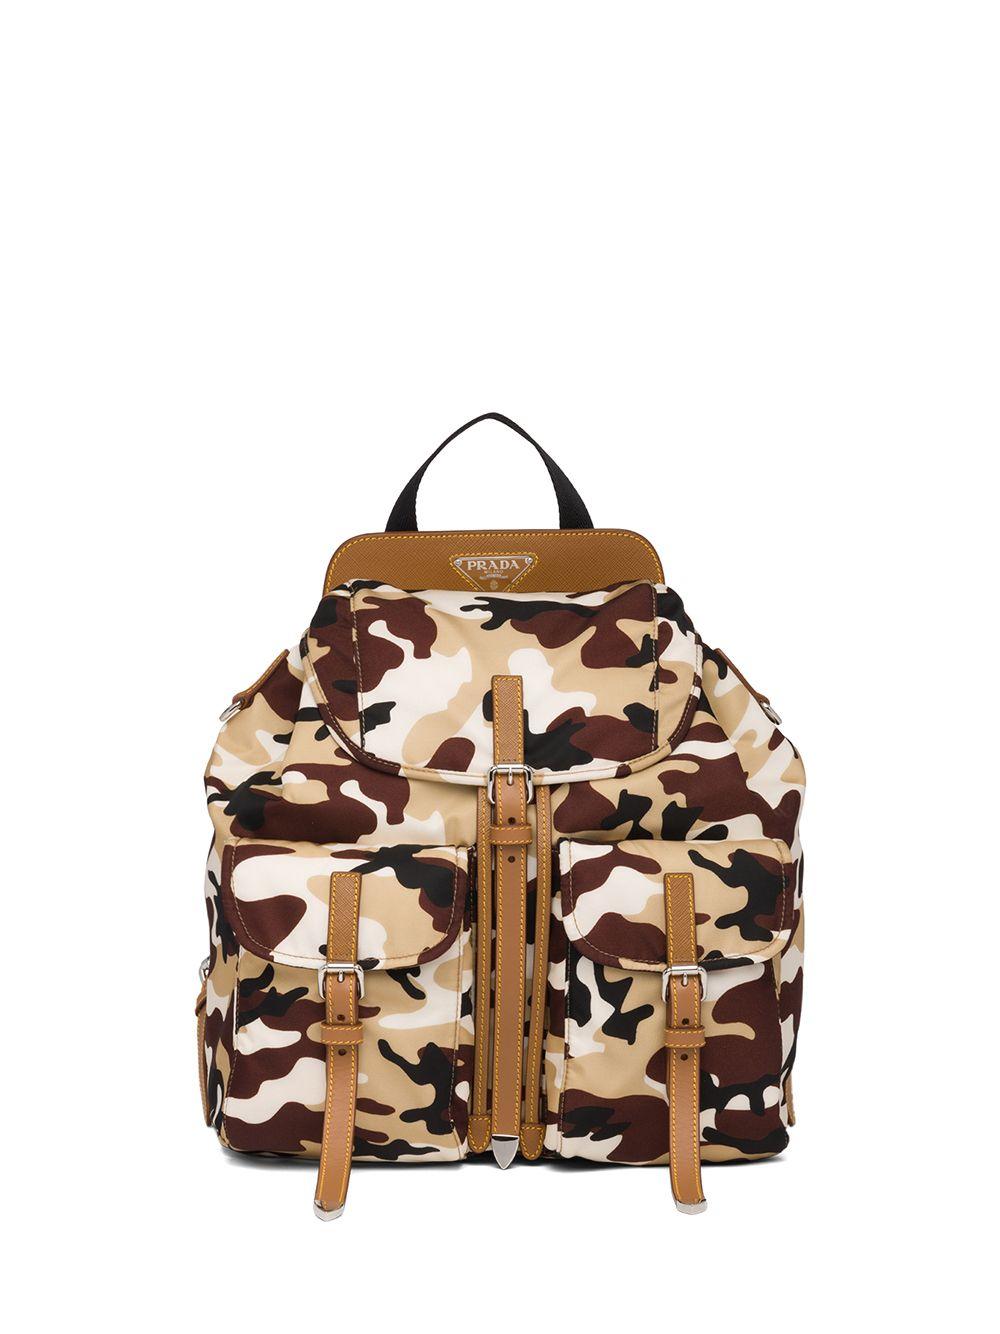 Prada Camouflage Pattern Backpack in Brown | Lyst